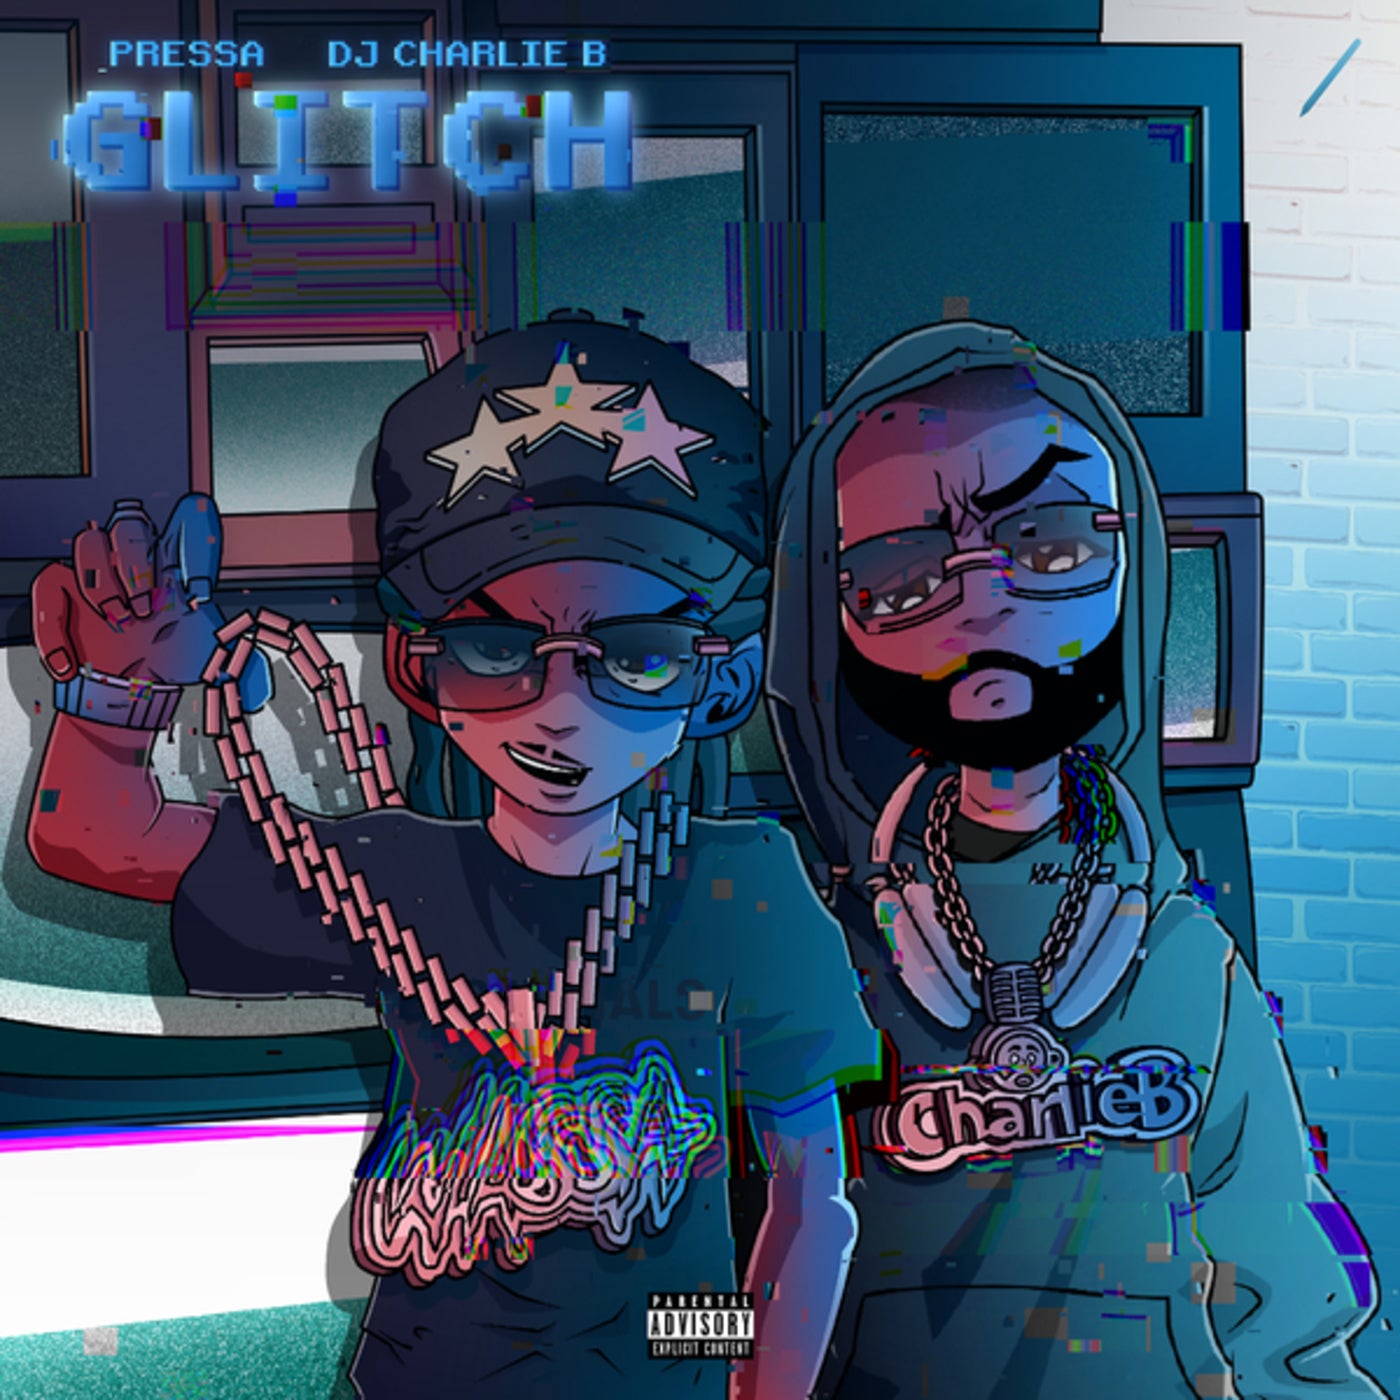 Glitch by Pressa and Dj Charlie B on Beatsource